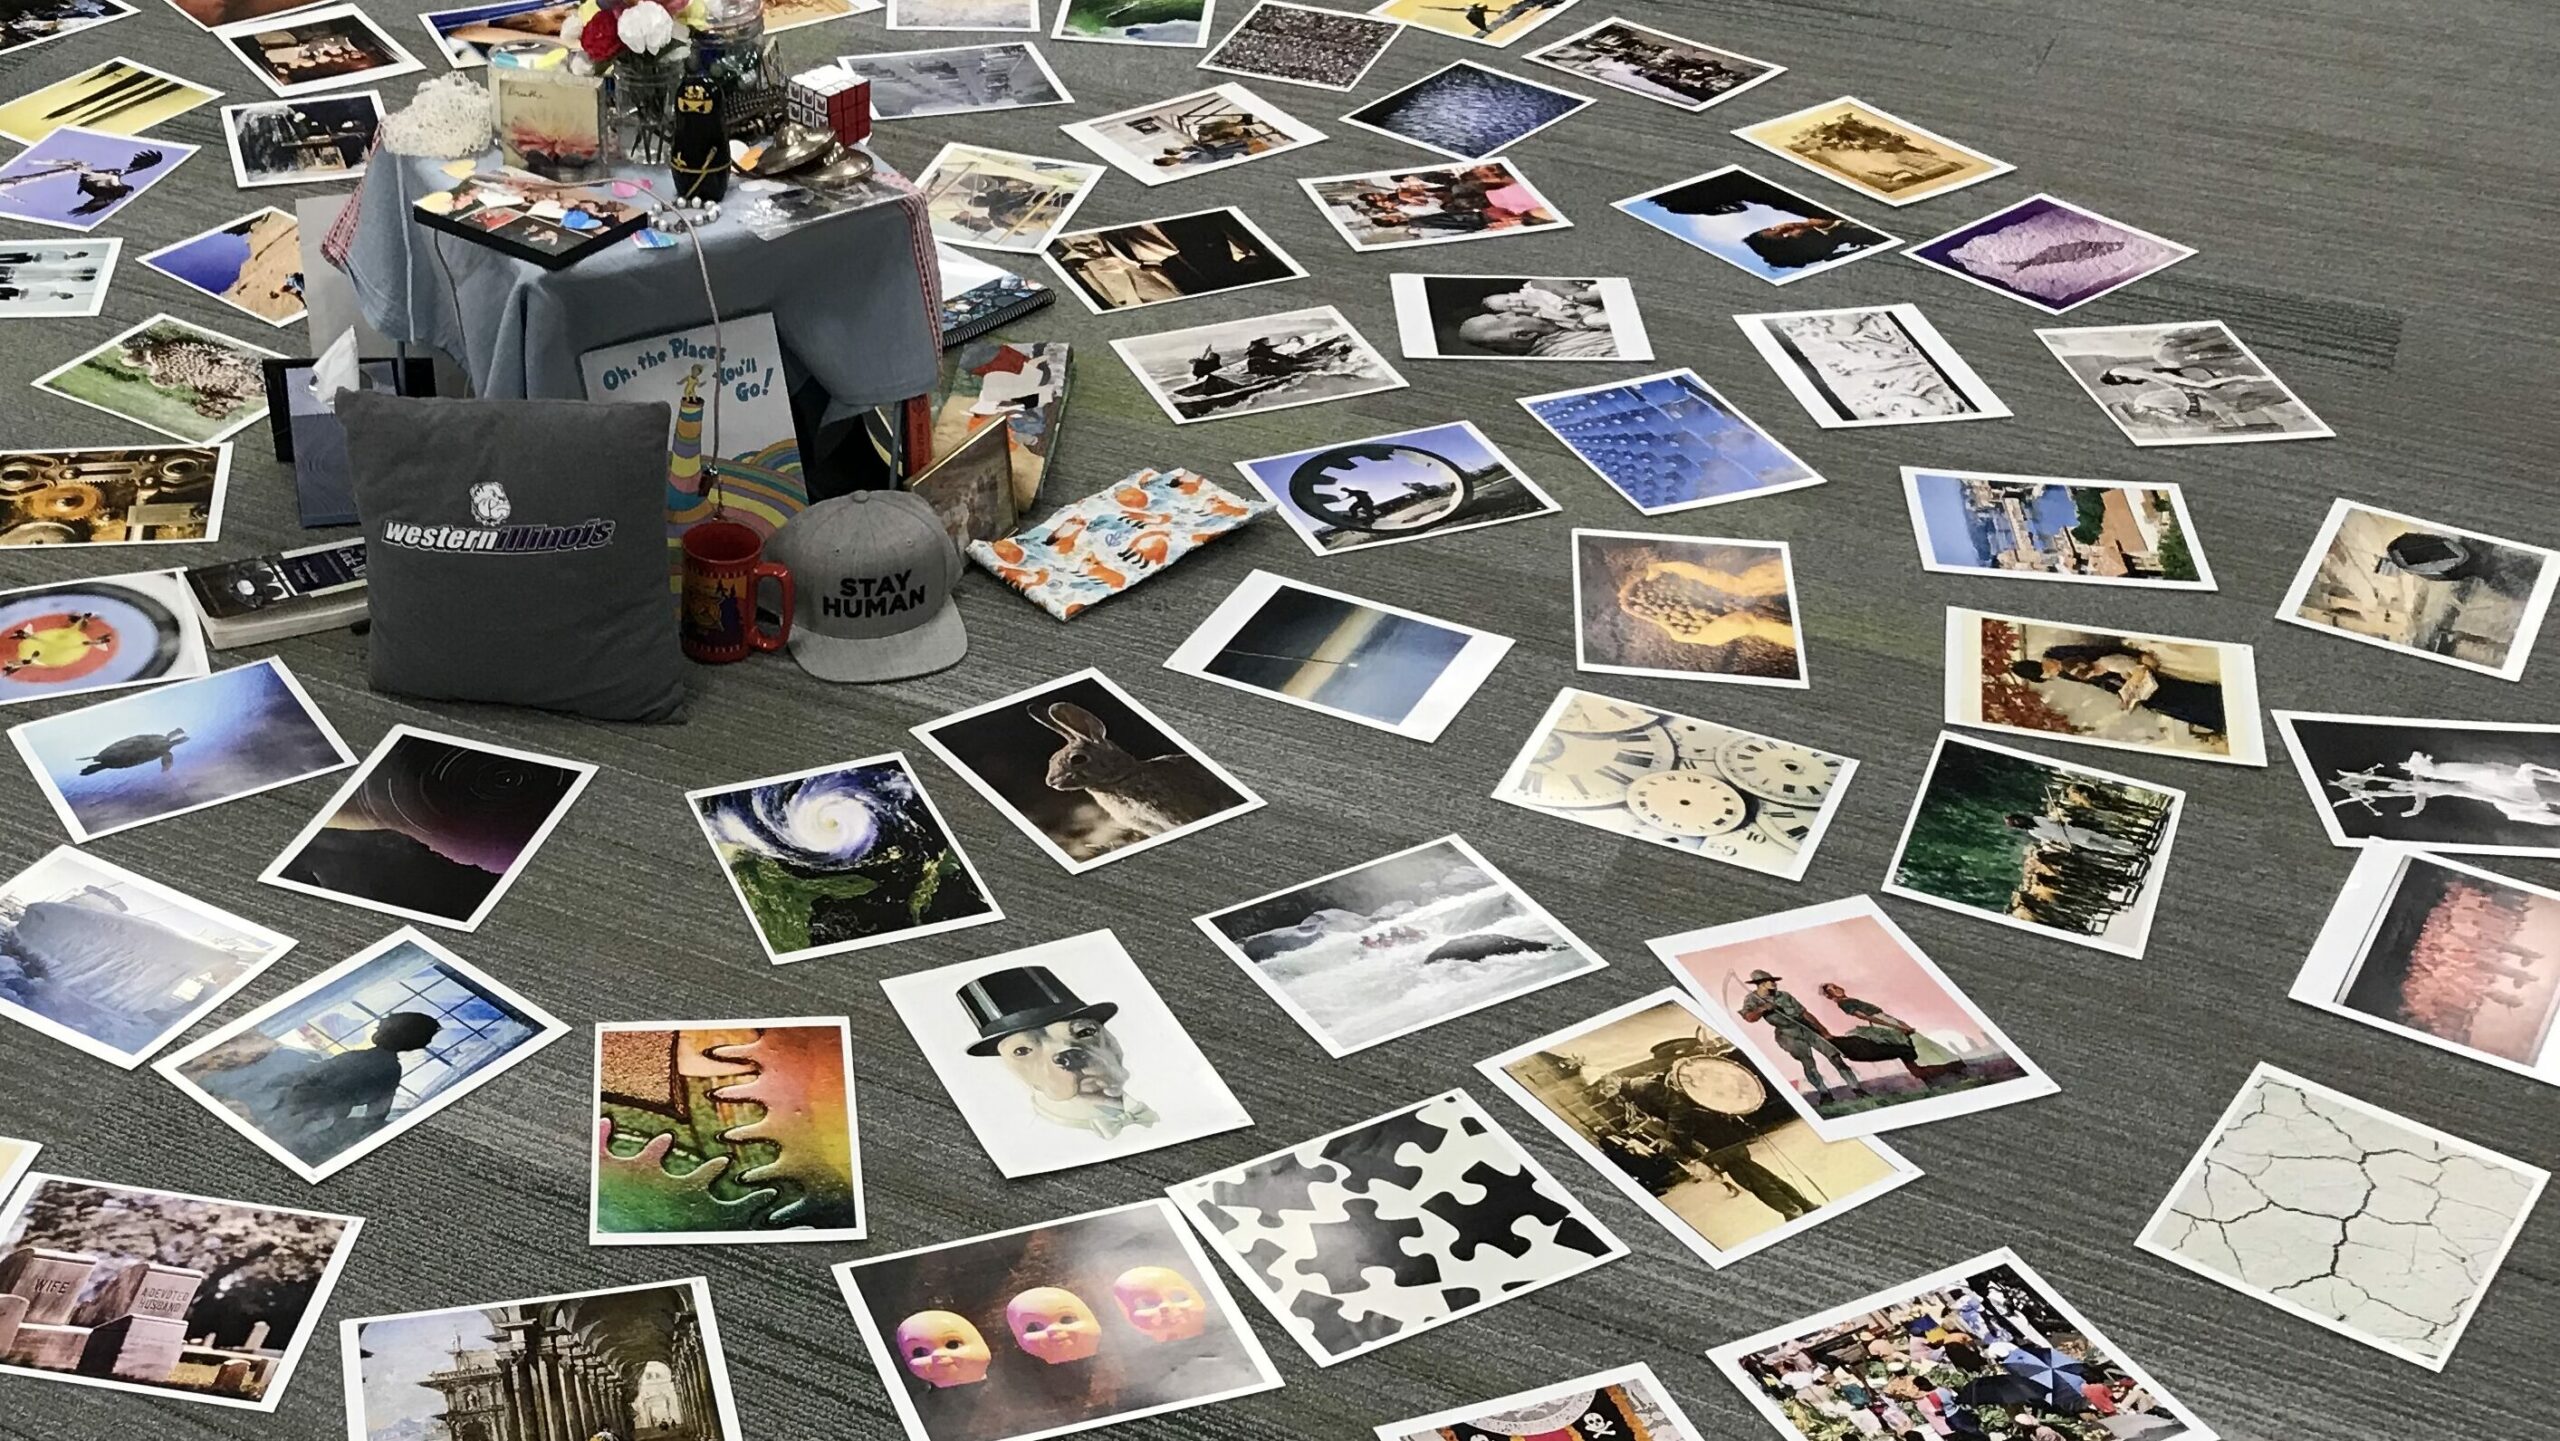 group facilitation activity photos arranged in circles on gray carpet